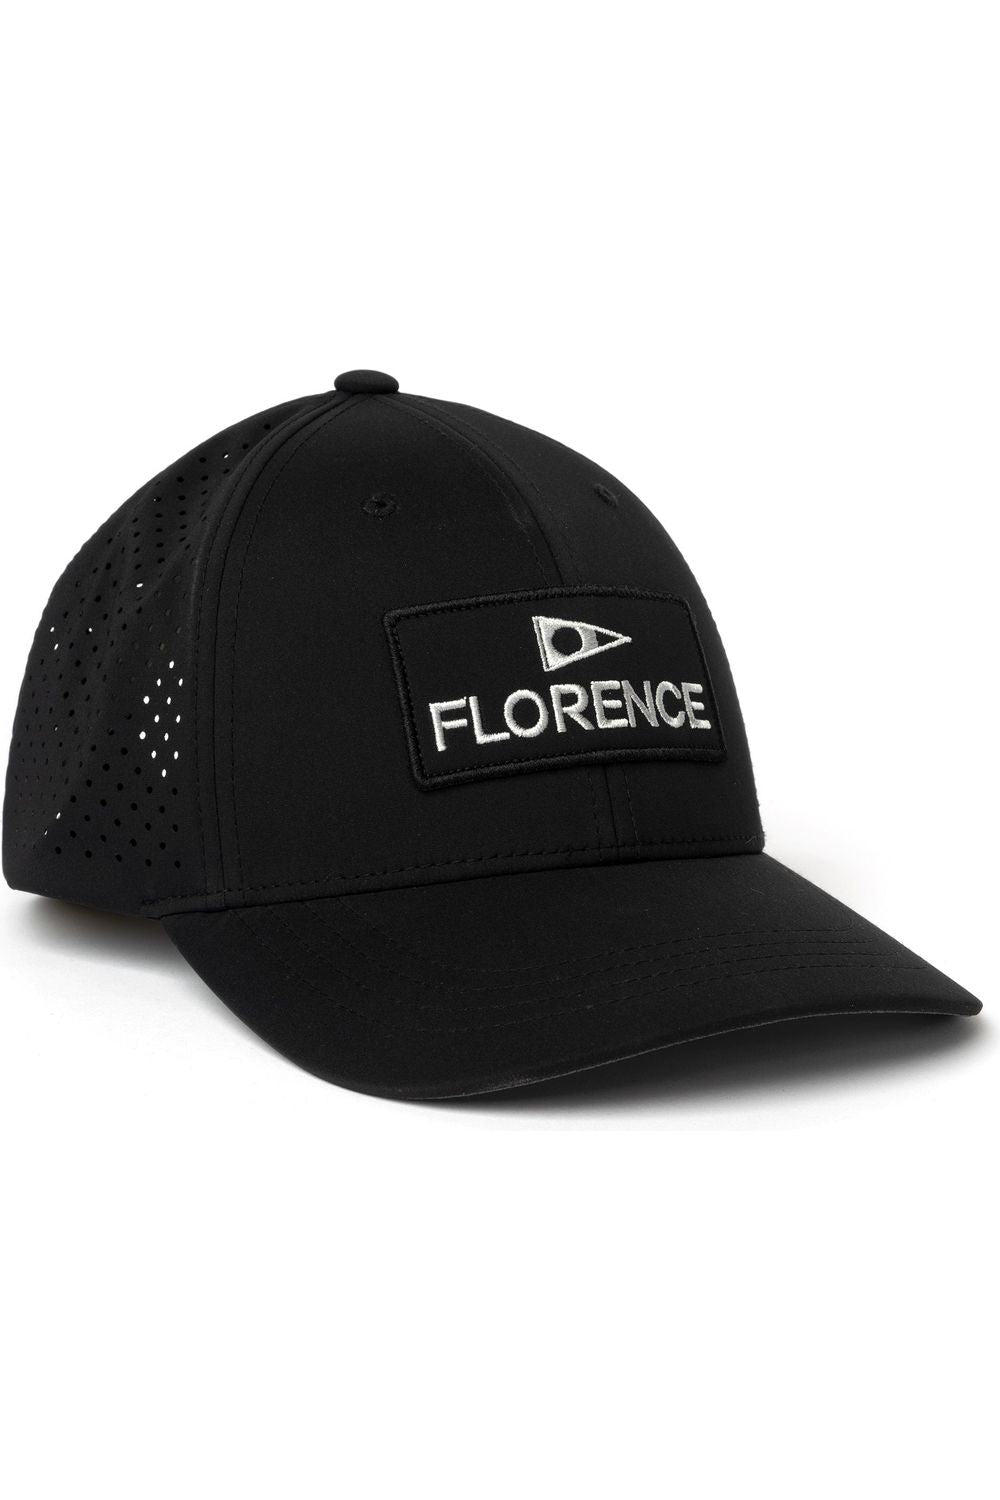 Florence Marine X Airtex Trucker Hat Black